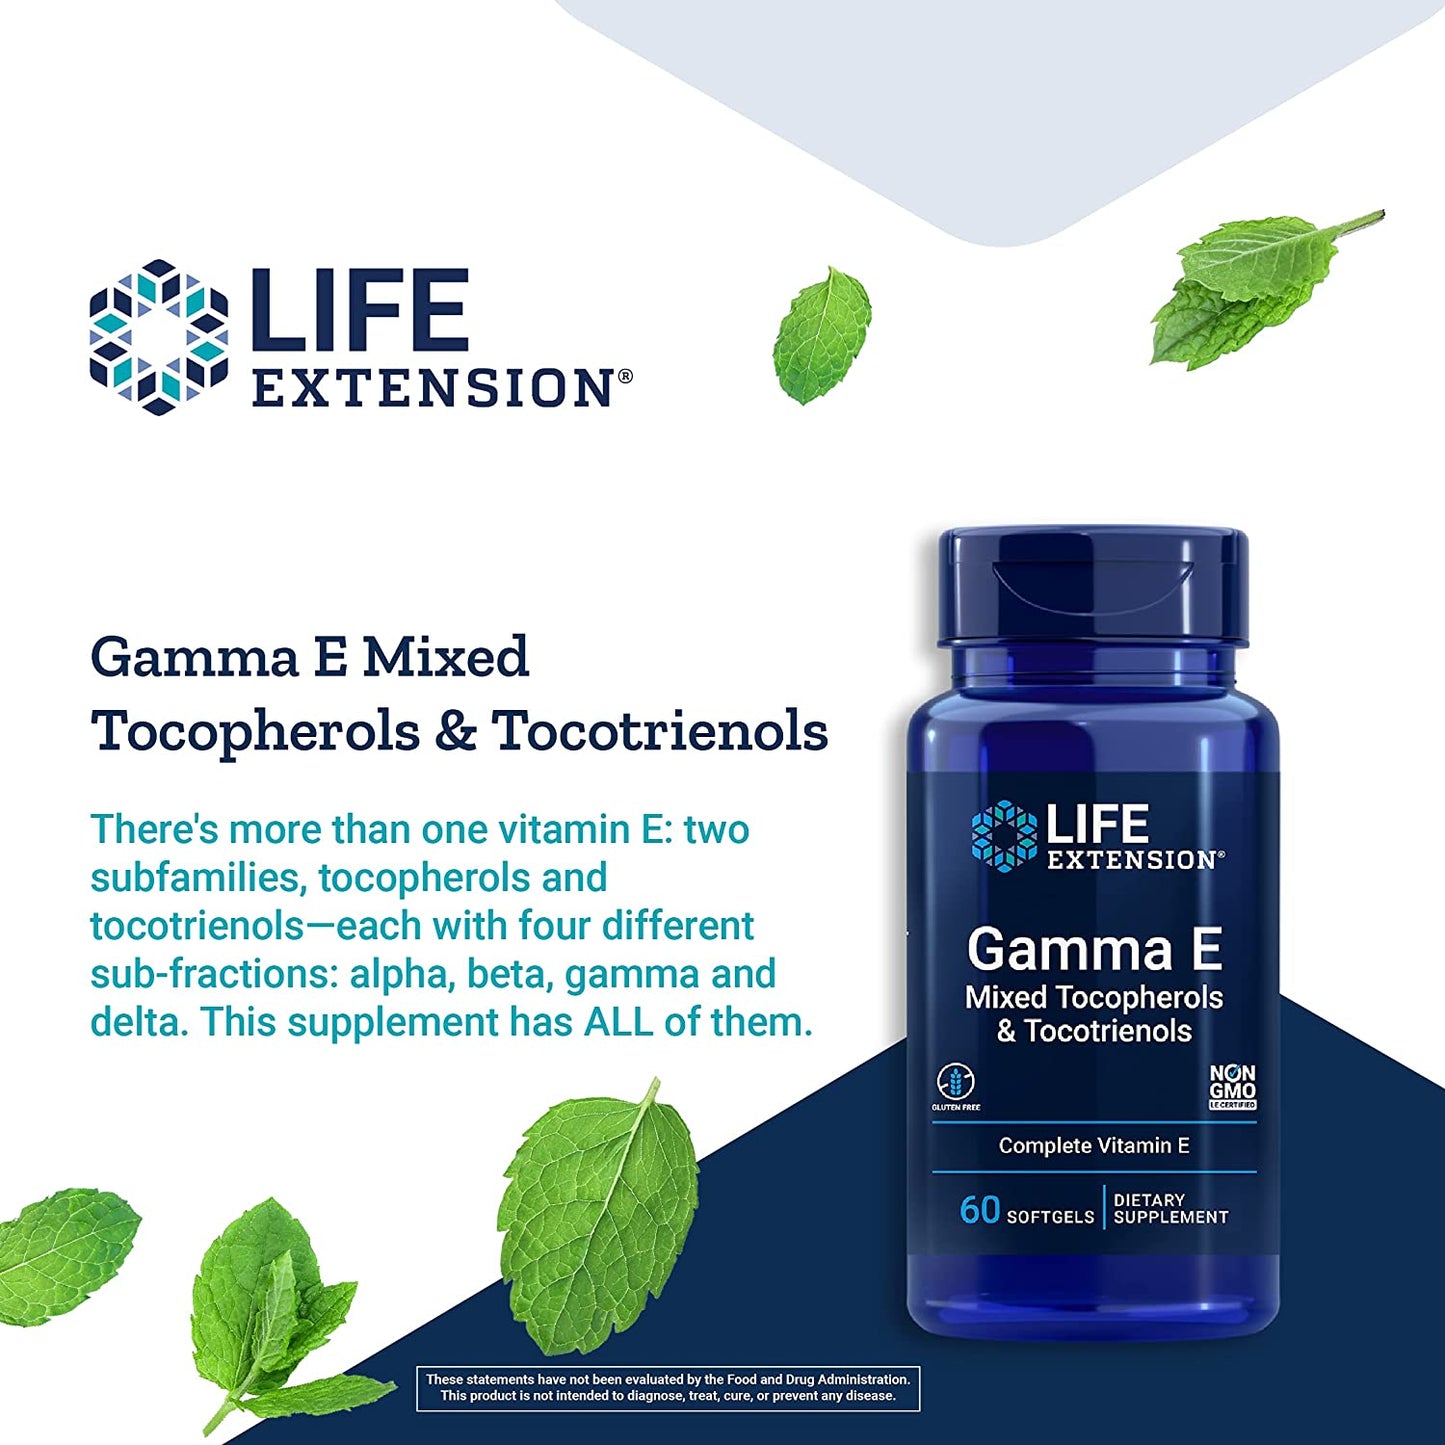 Life Extension Gamma E Mixed Tocopherols & Tocotrienols – Complete Vitamin E Spectrum, Antioxidant Protection – Non-Gmo, Gluten-Free – 60 Softgels